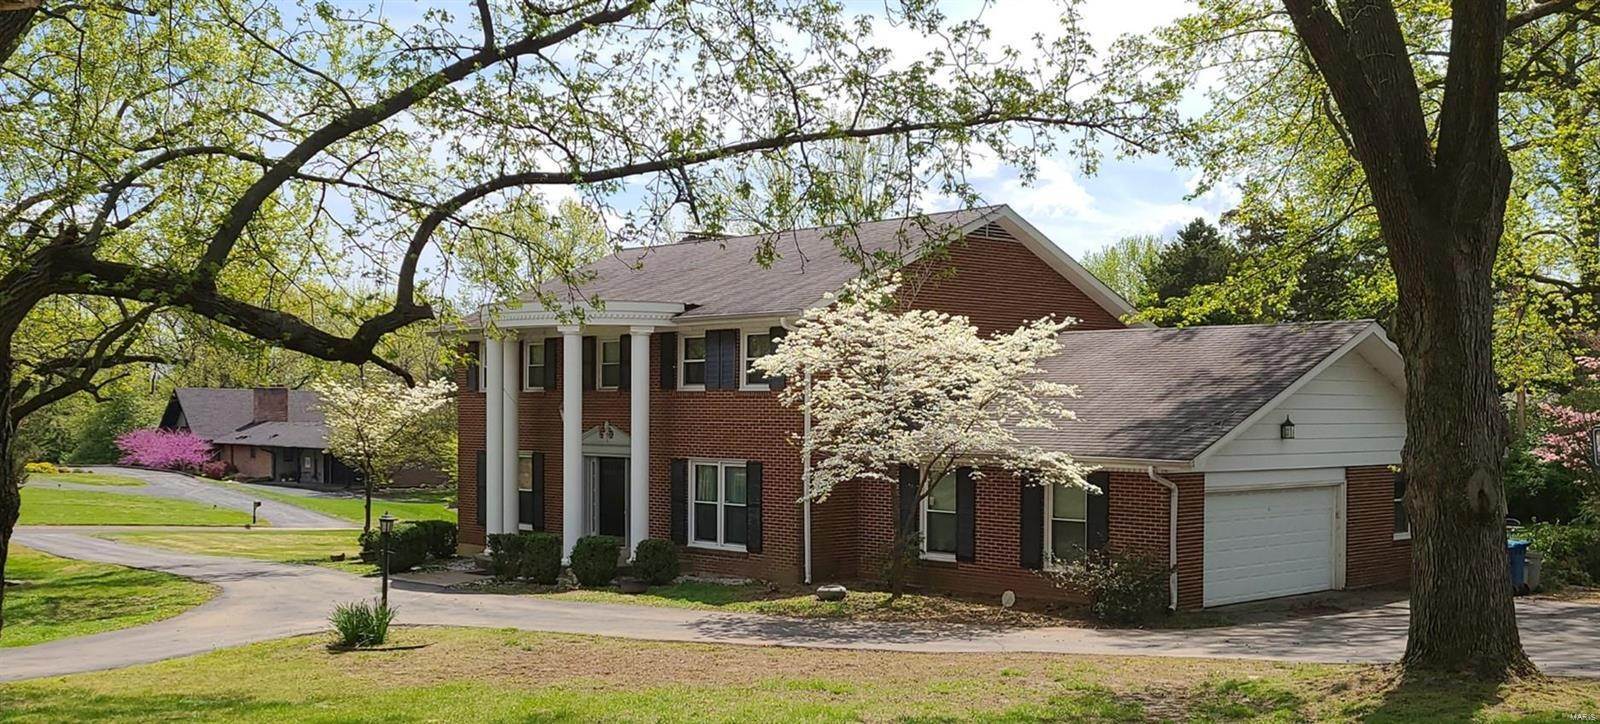 Single Family Homes for Sale at 128 Ladue Oaks Drive Creve Coeur, Missouri 63141 United States